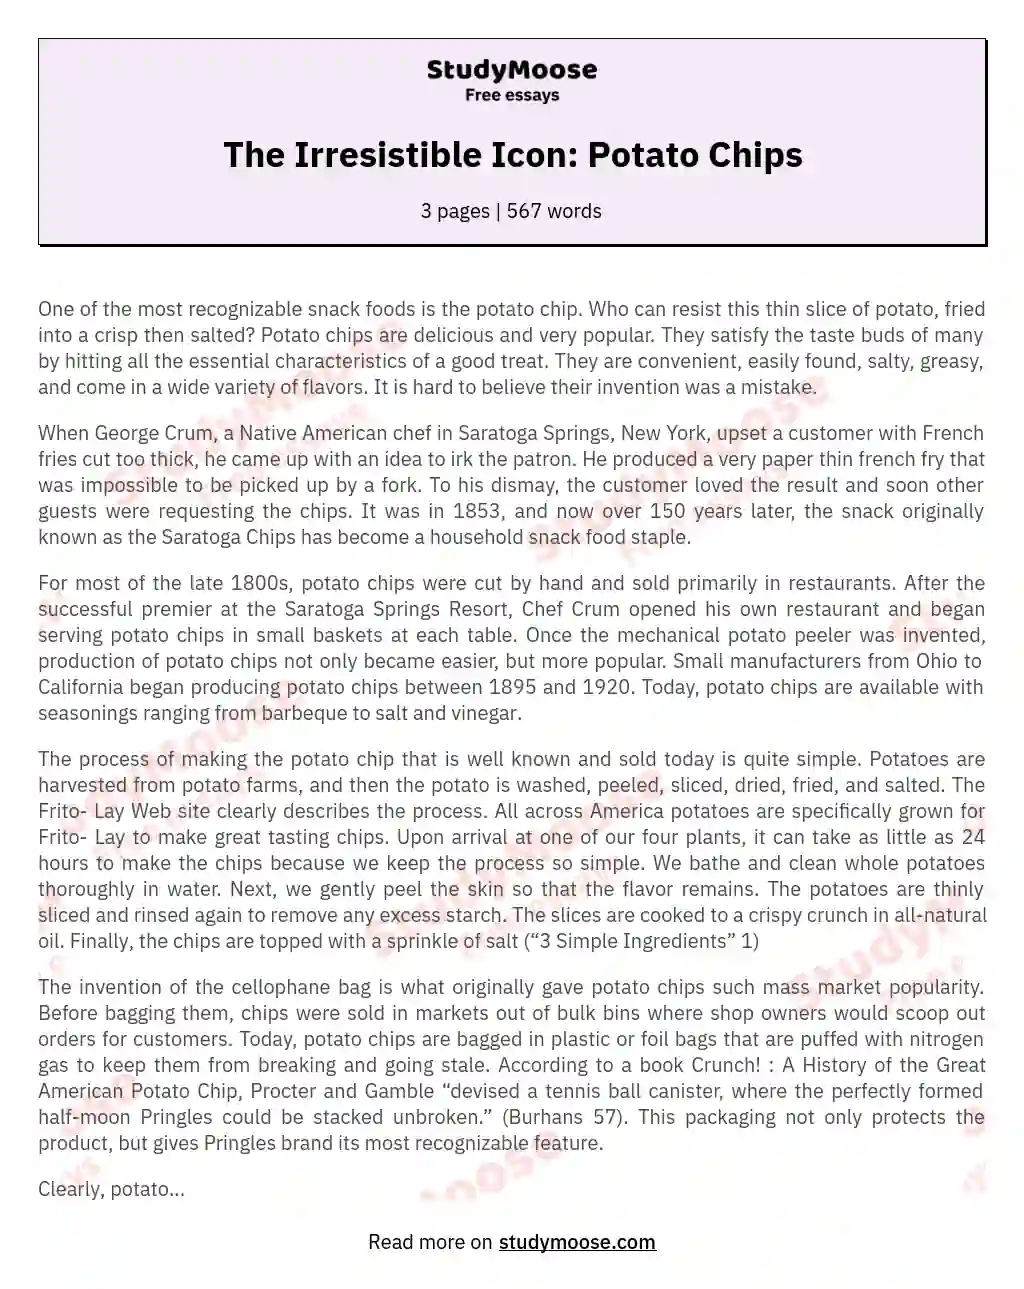 The Irresistible Icon: Potato Chips essay